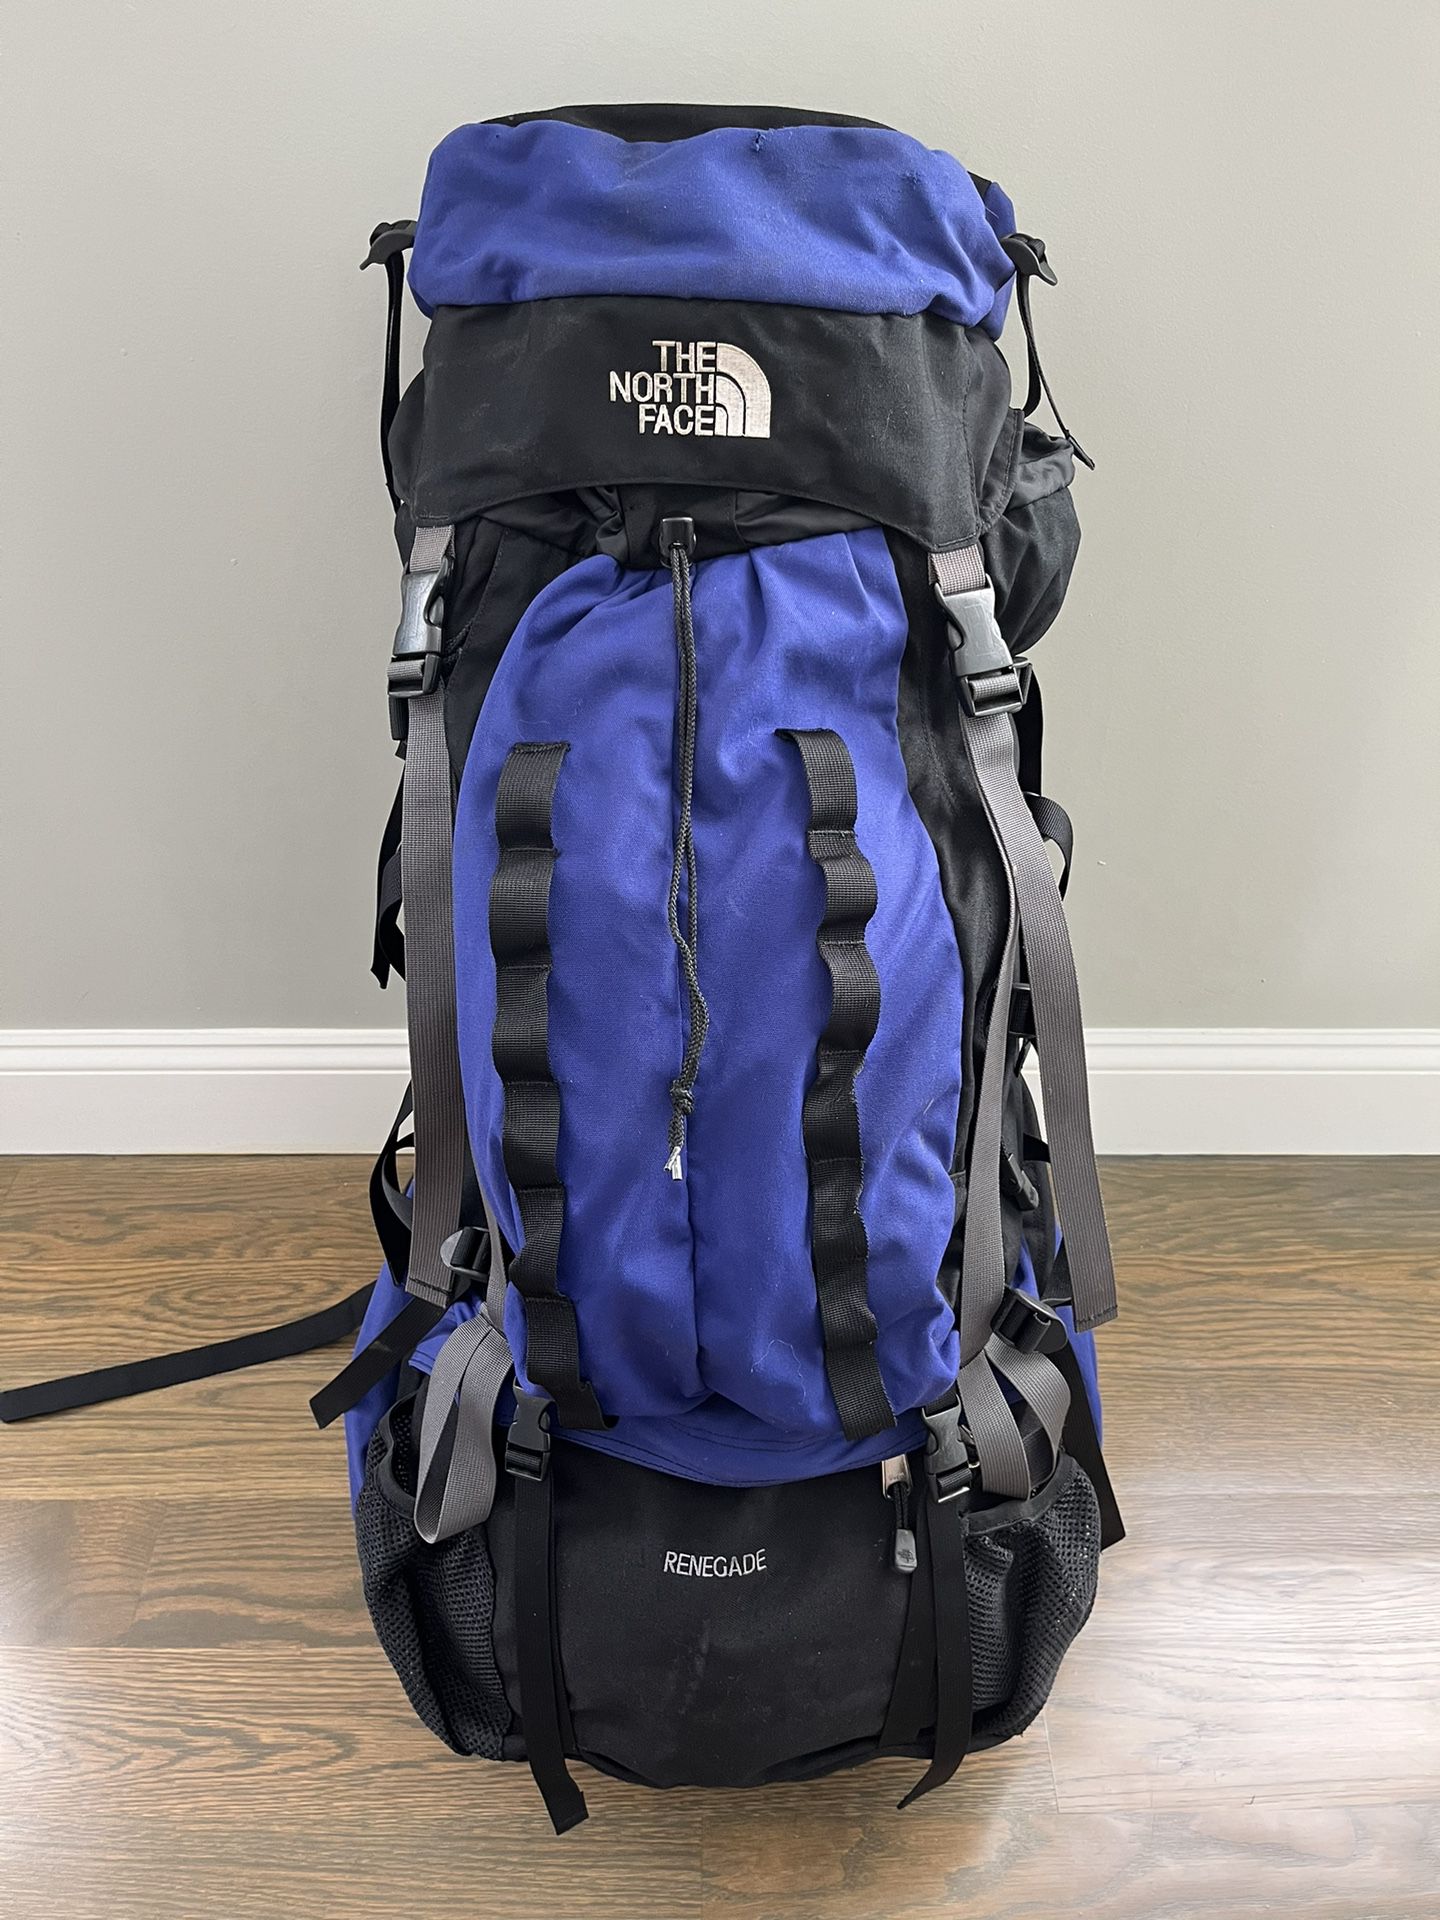 The North Face Renegade Internal Frame Backpack Size Men’s Medium